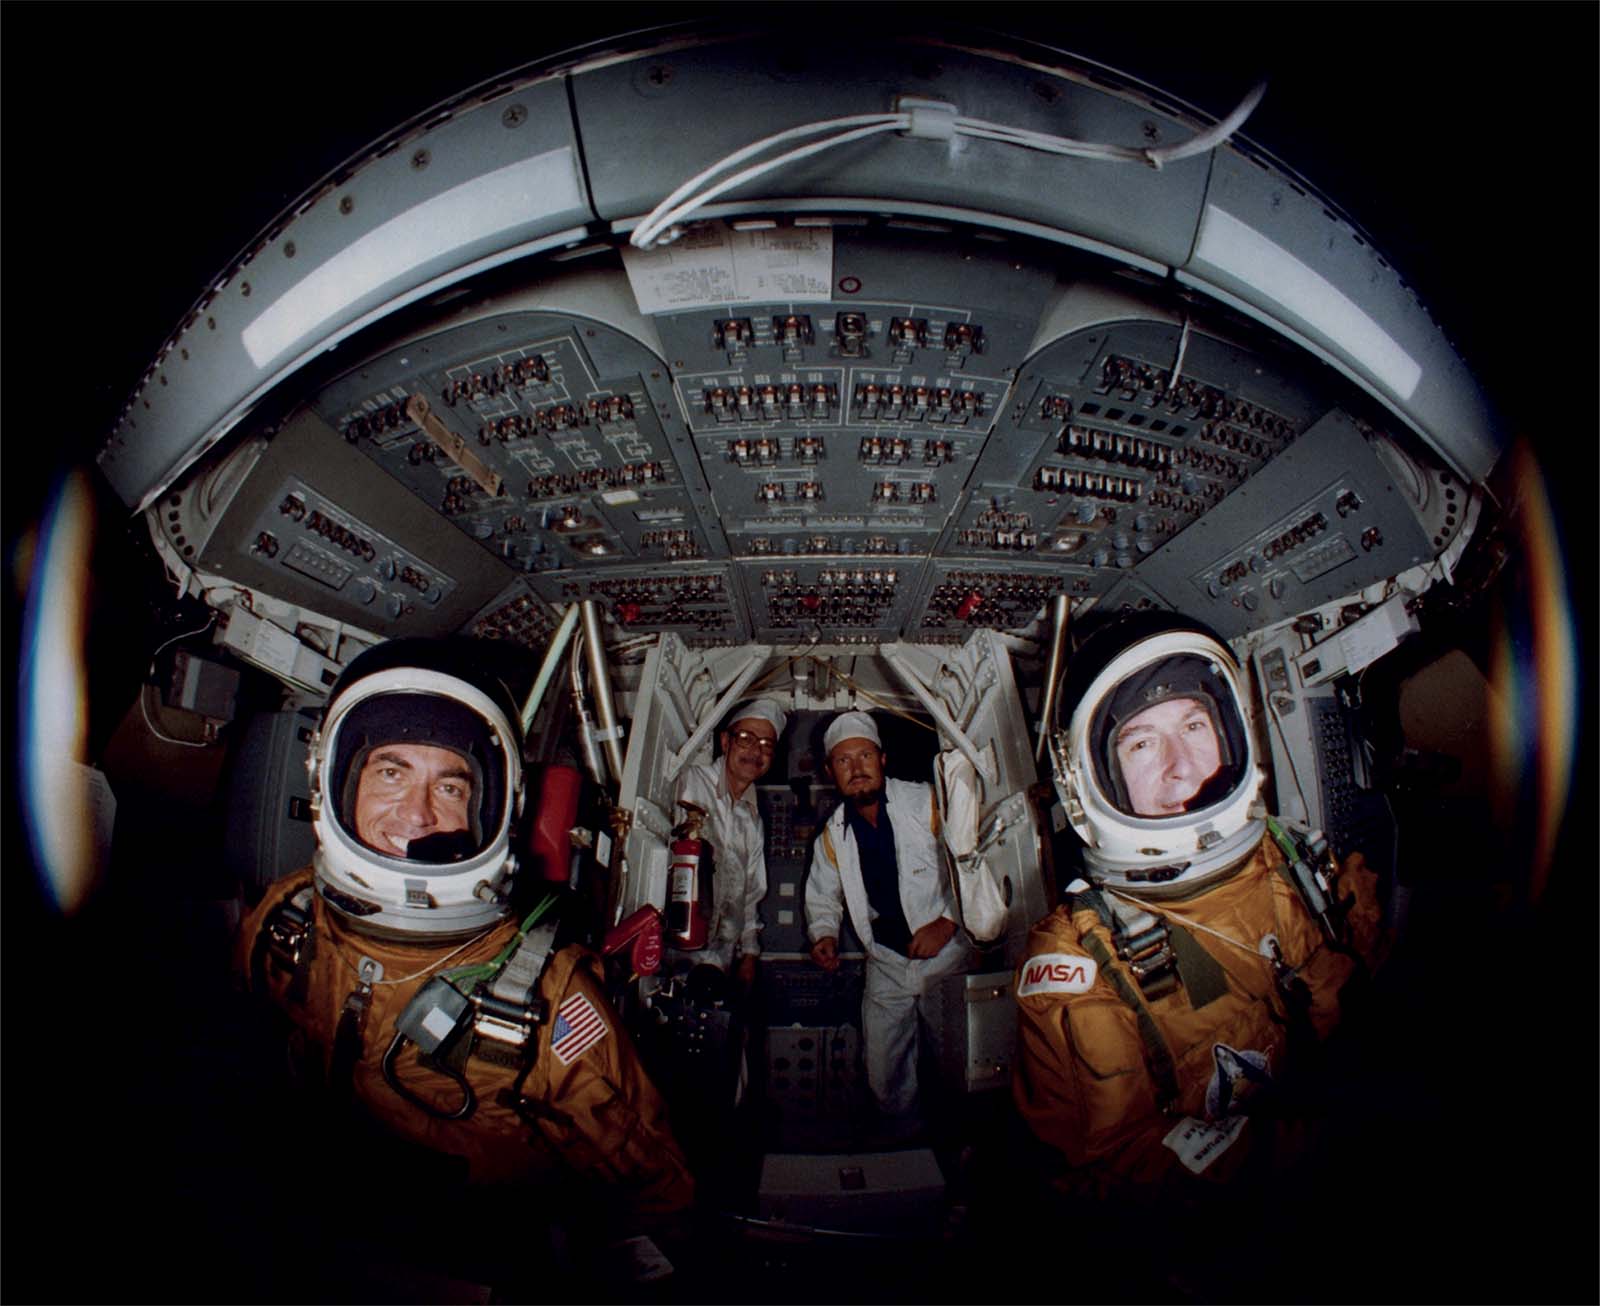 Rare photos show the early years of NASA's space shuttle era - CNN Style